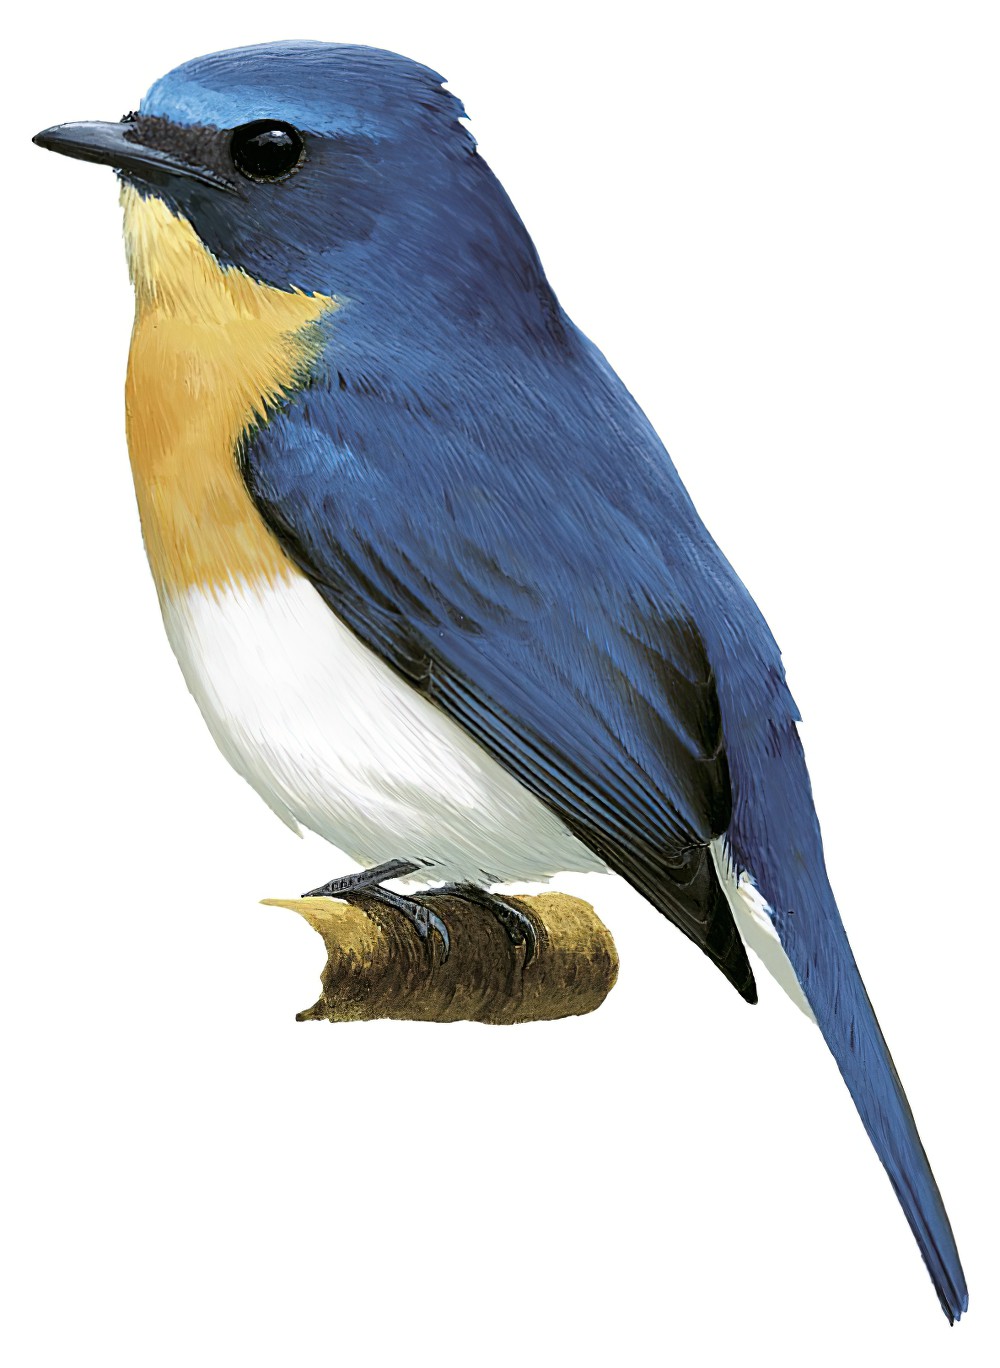 印支蓝仙鹟 / Indochinese Blue Flycatcher / Cyornis sumatrensis